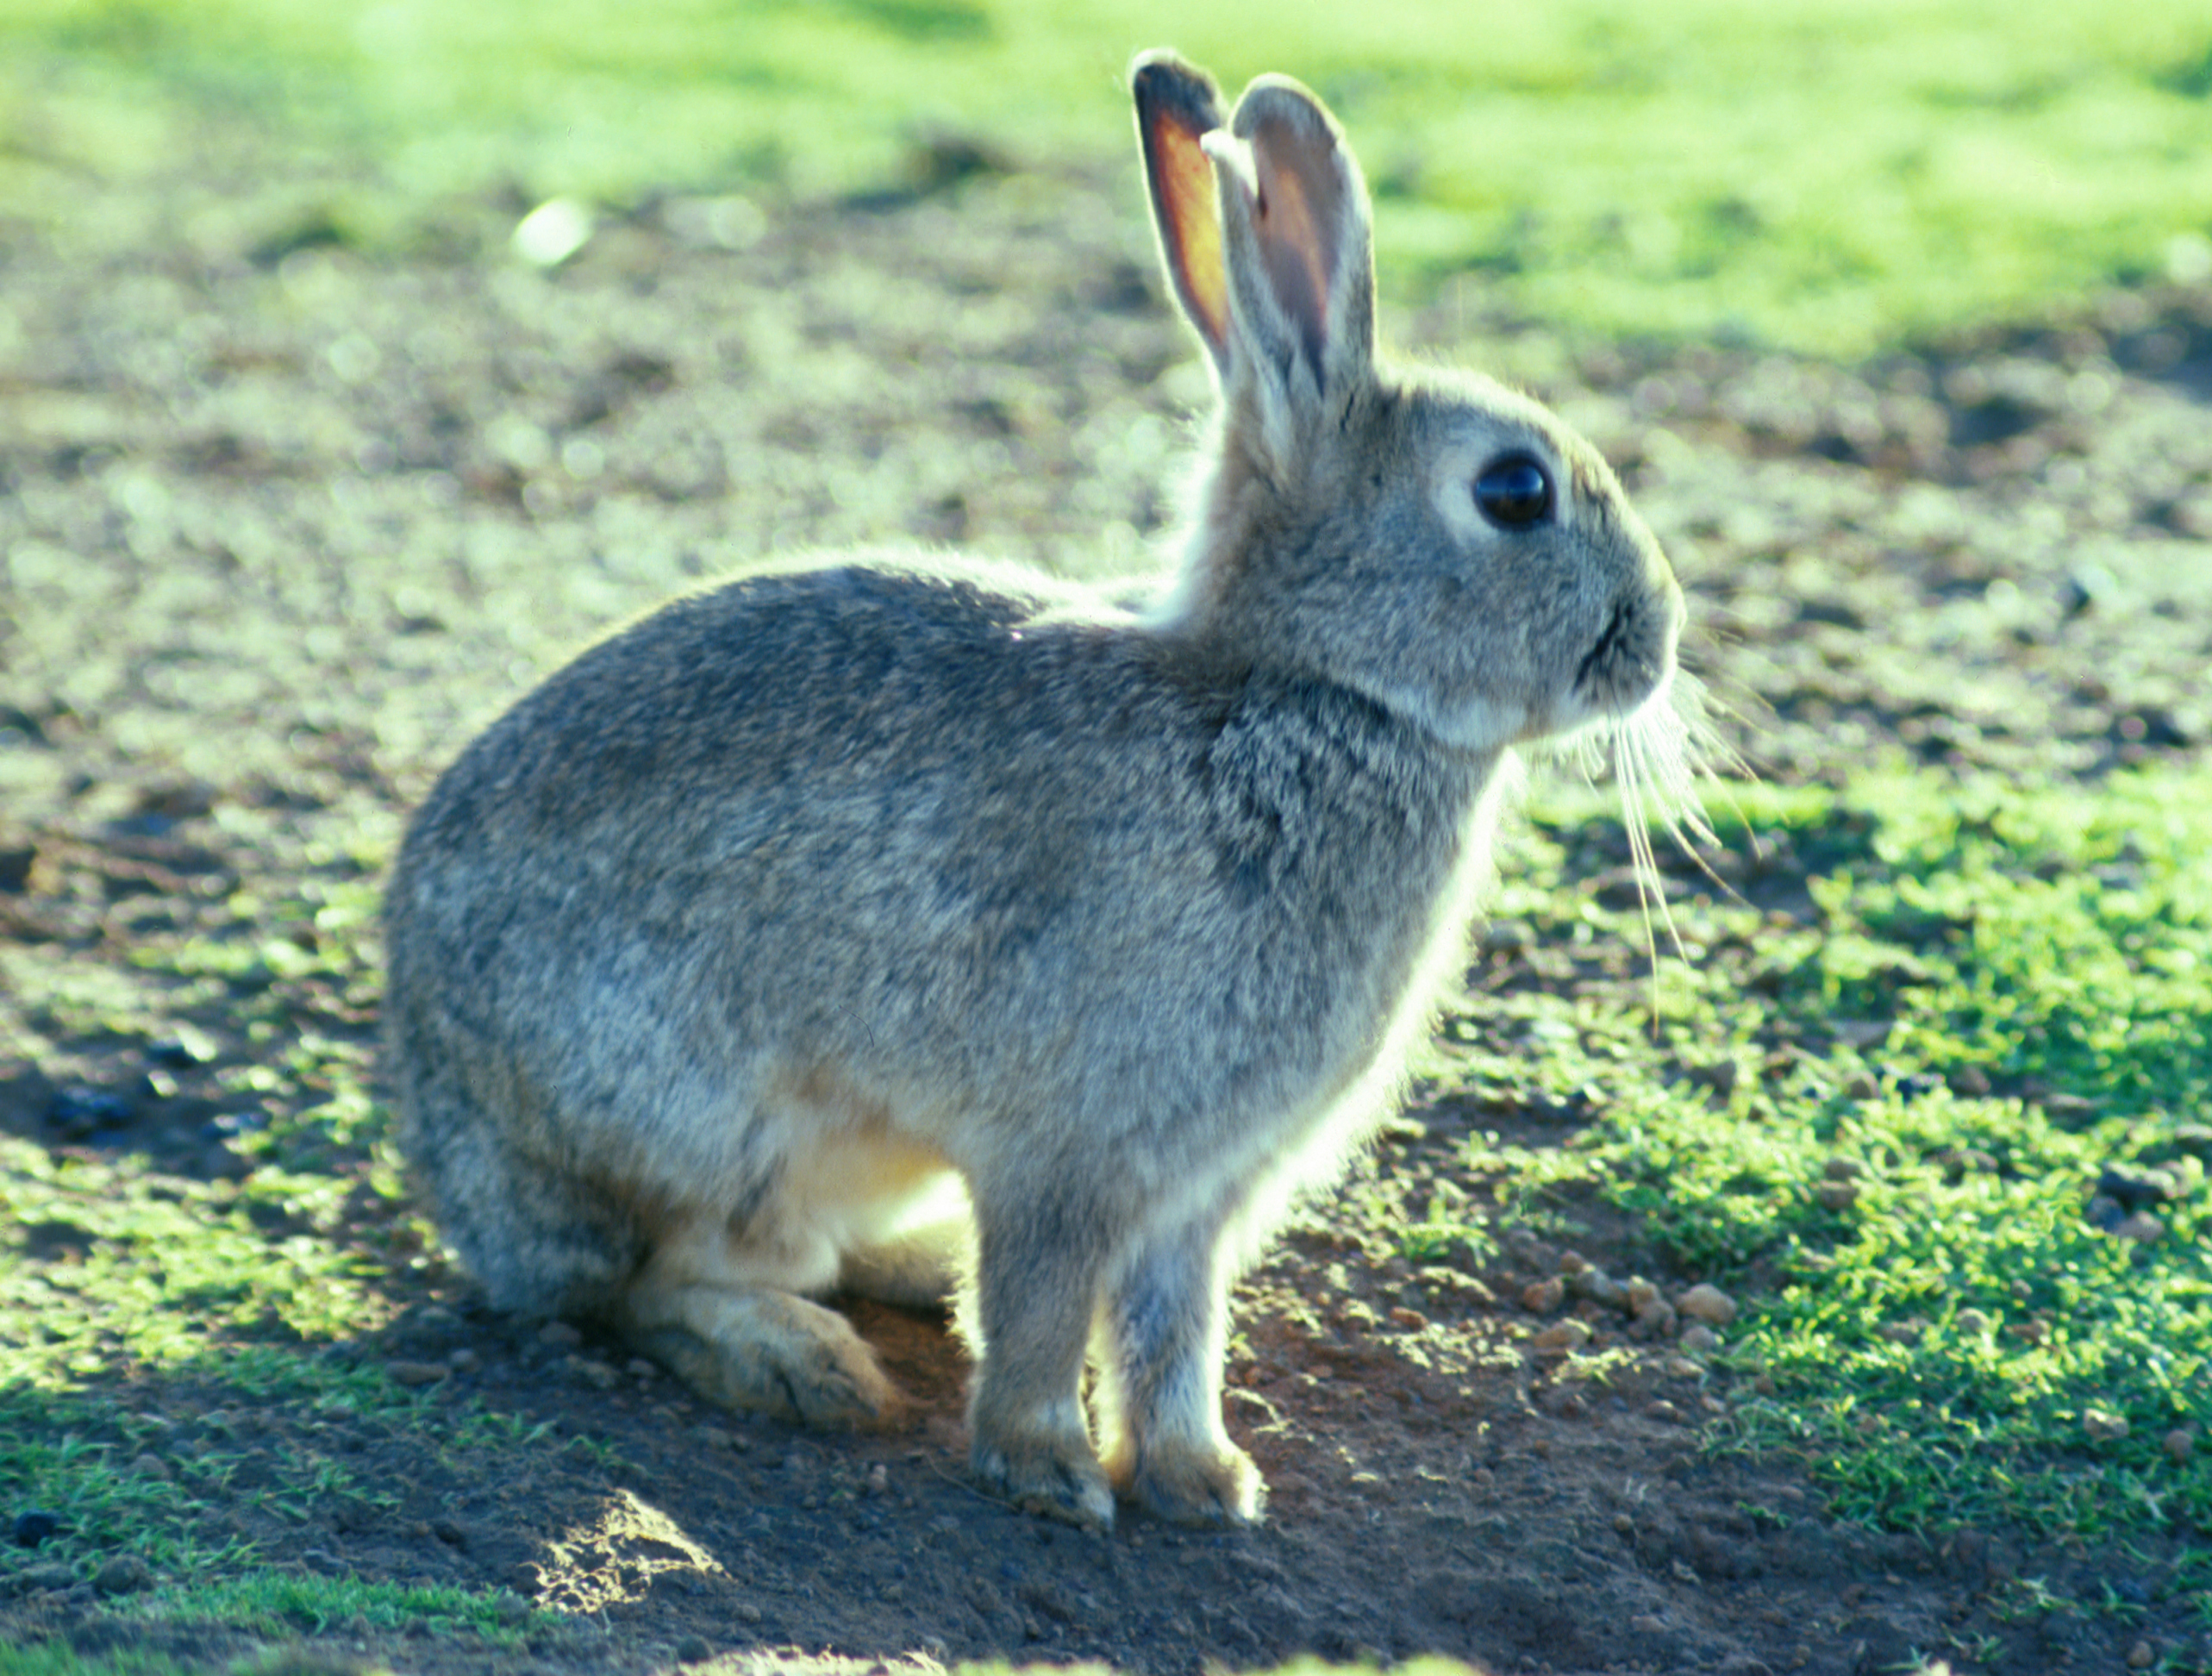 File:CSIRO ScienceImage 1369 European rabbit.jpg - Wikimedia Commons